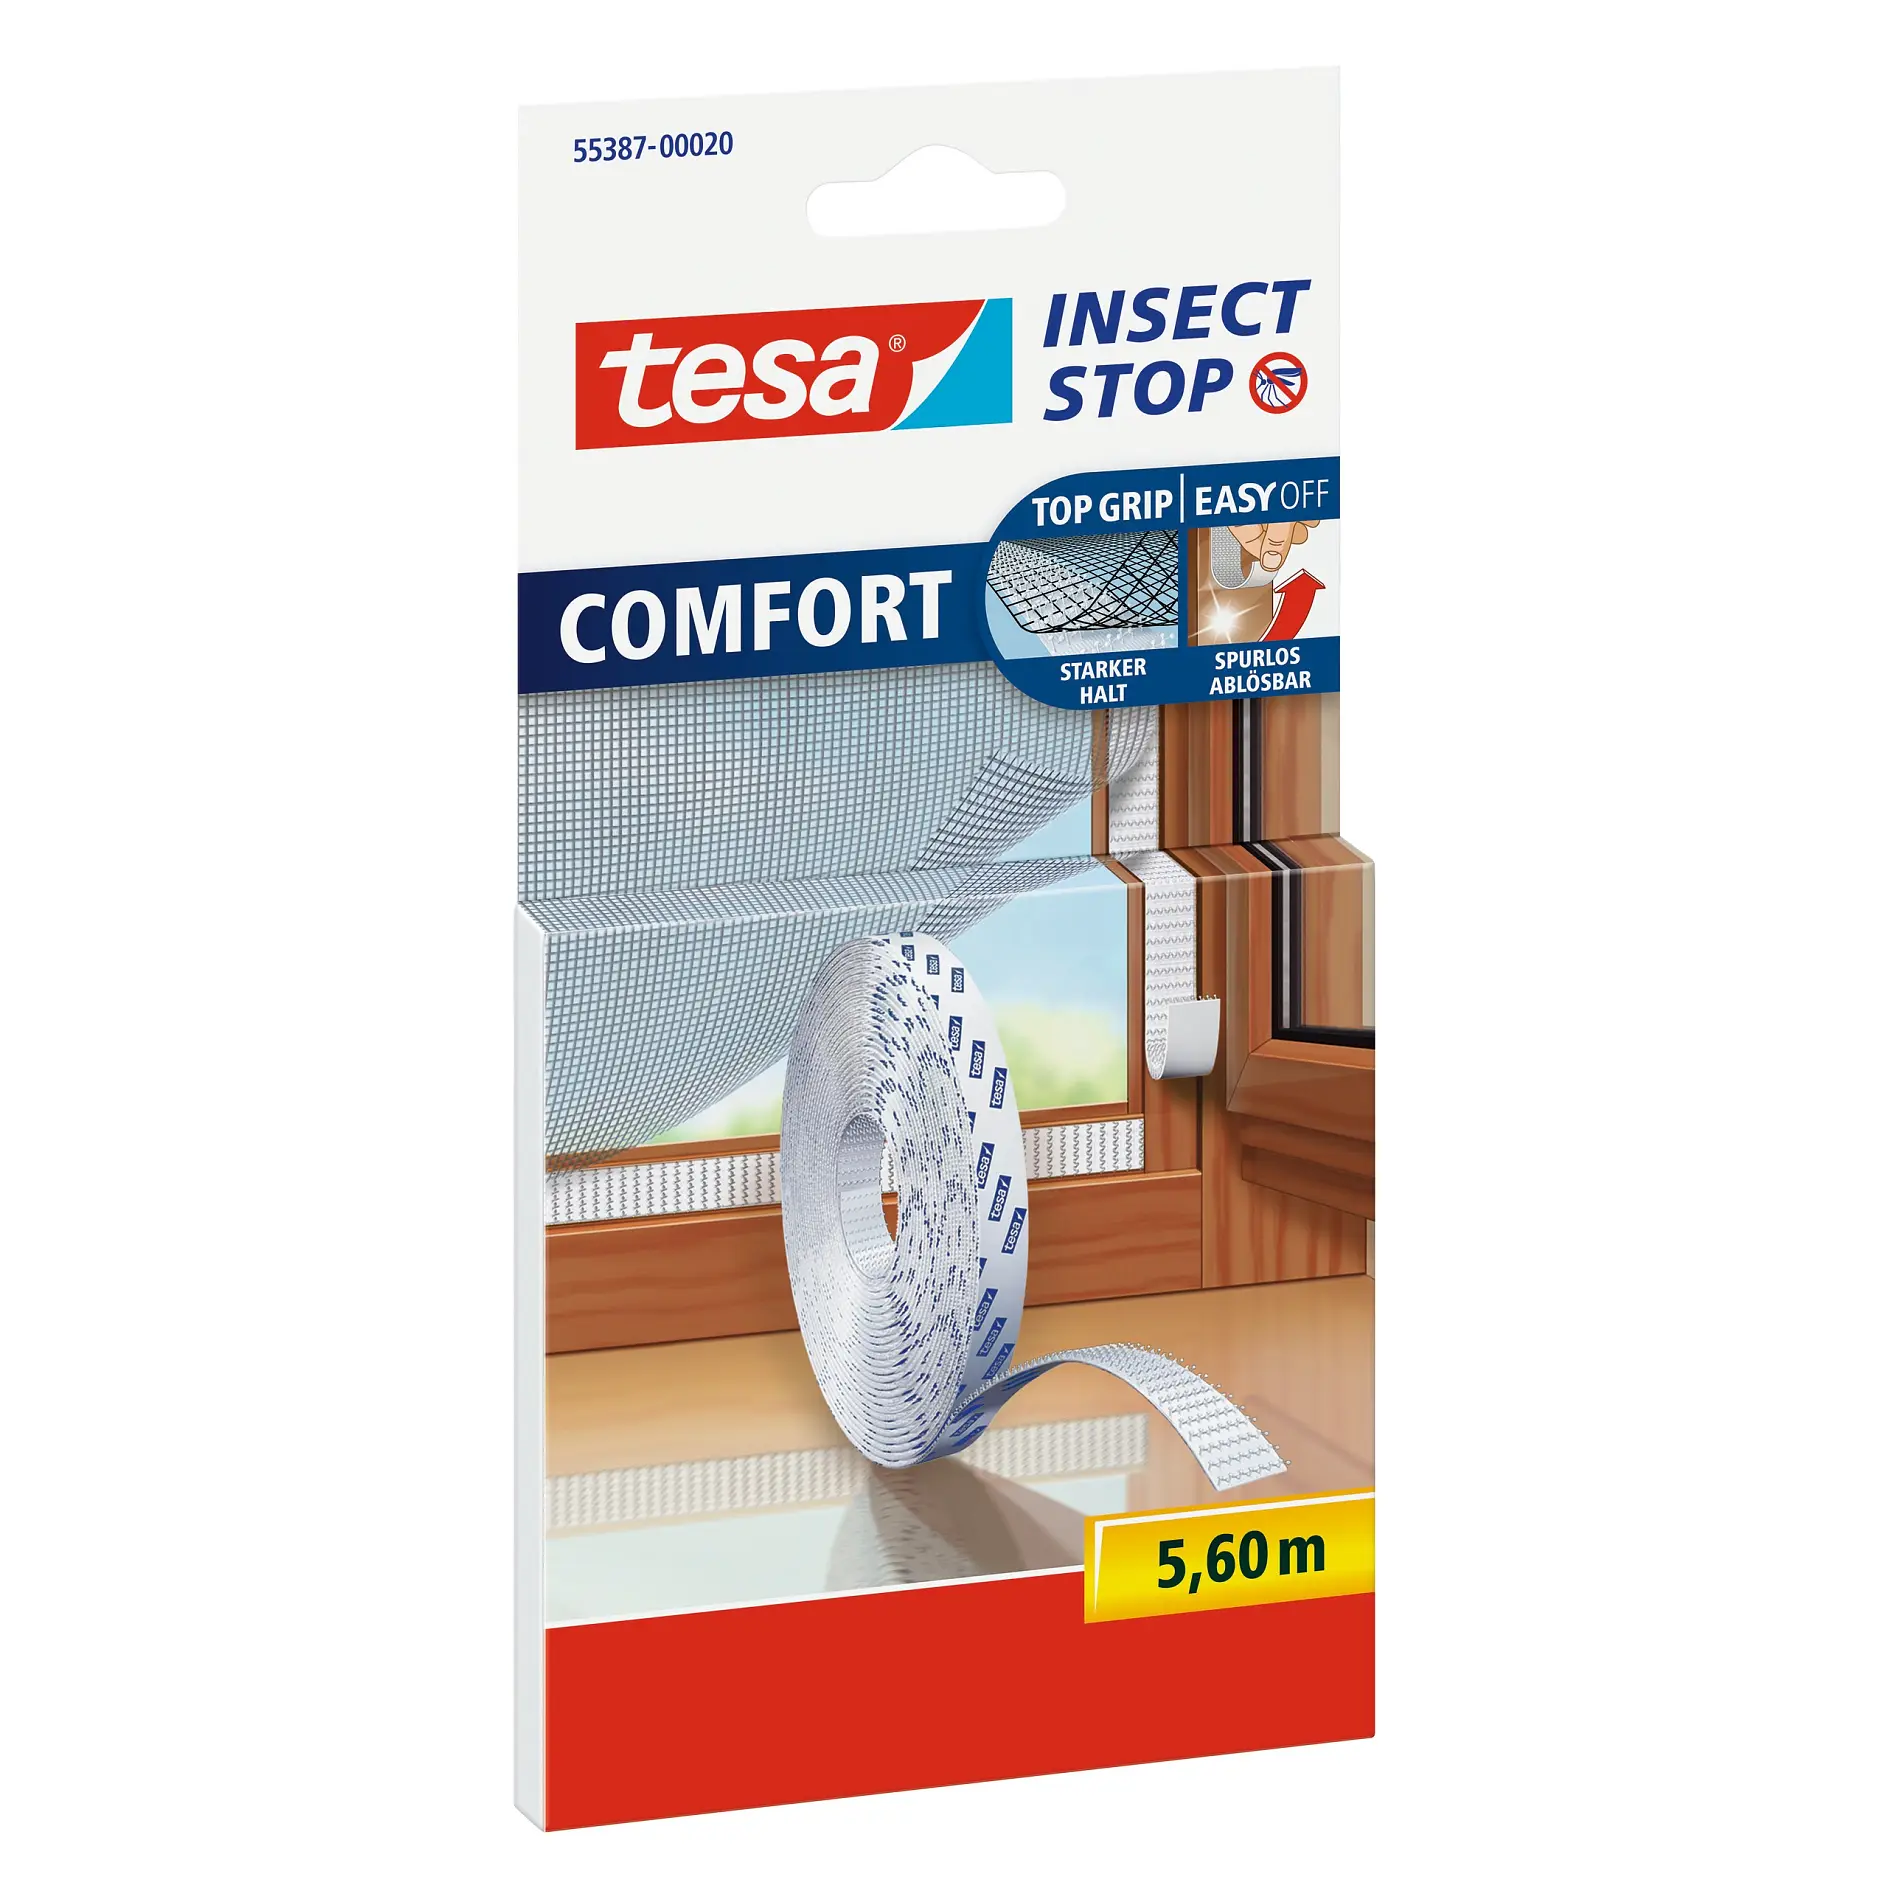 [en-en] tesa Insect Stop Comfort, replacement hook &amp; loop tape